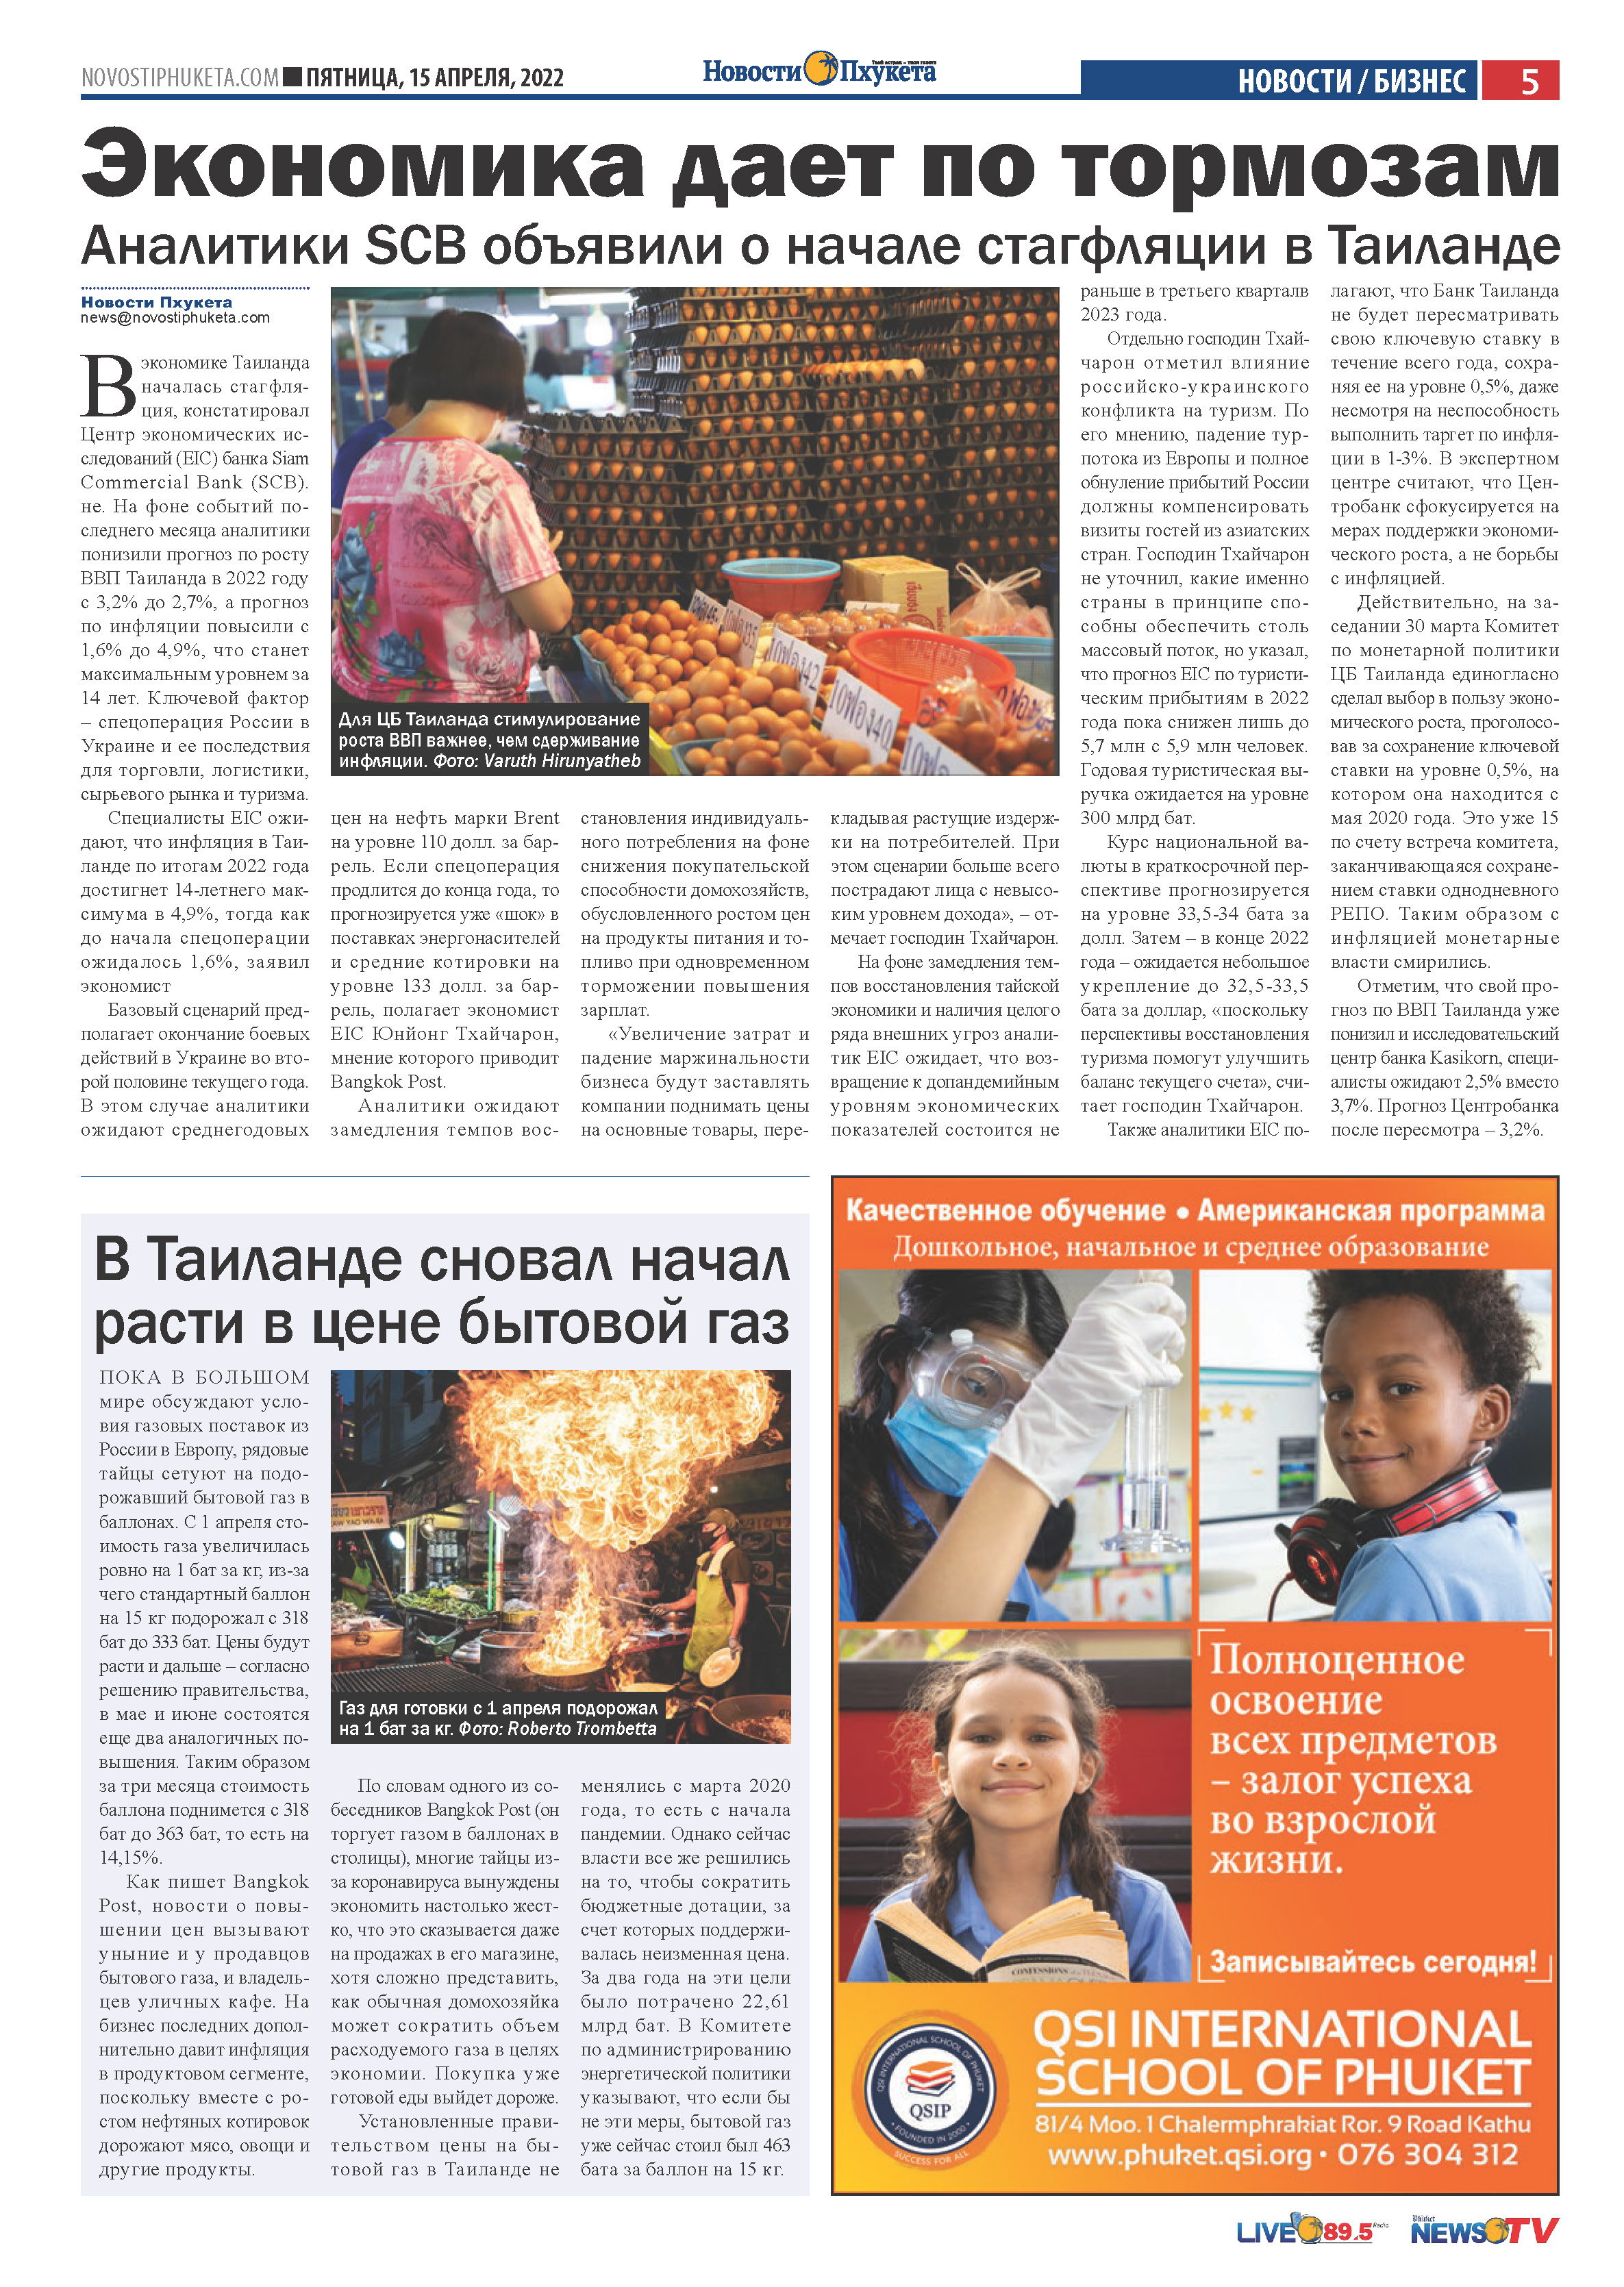 Phuket Newspaper - https://www.novostiphuketa.com/archive/15-04-2022/15-04-2022_Page_05.jpg